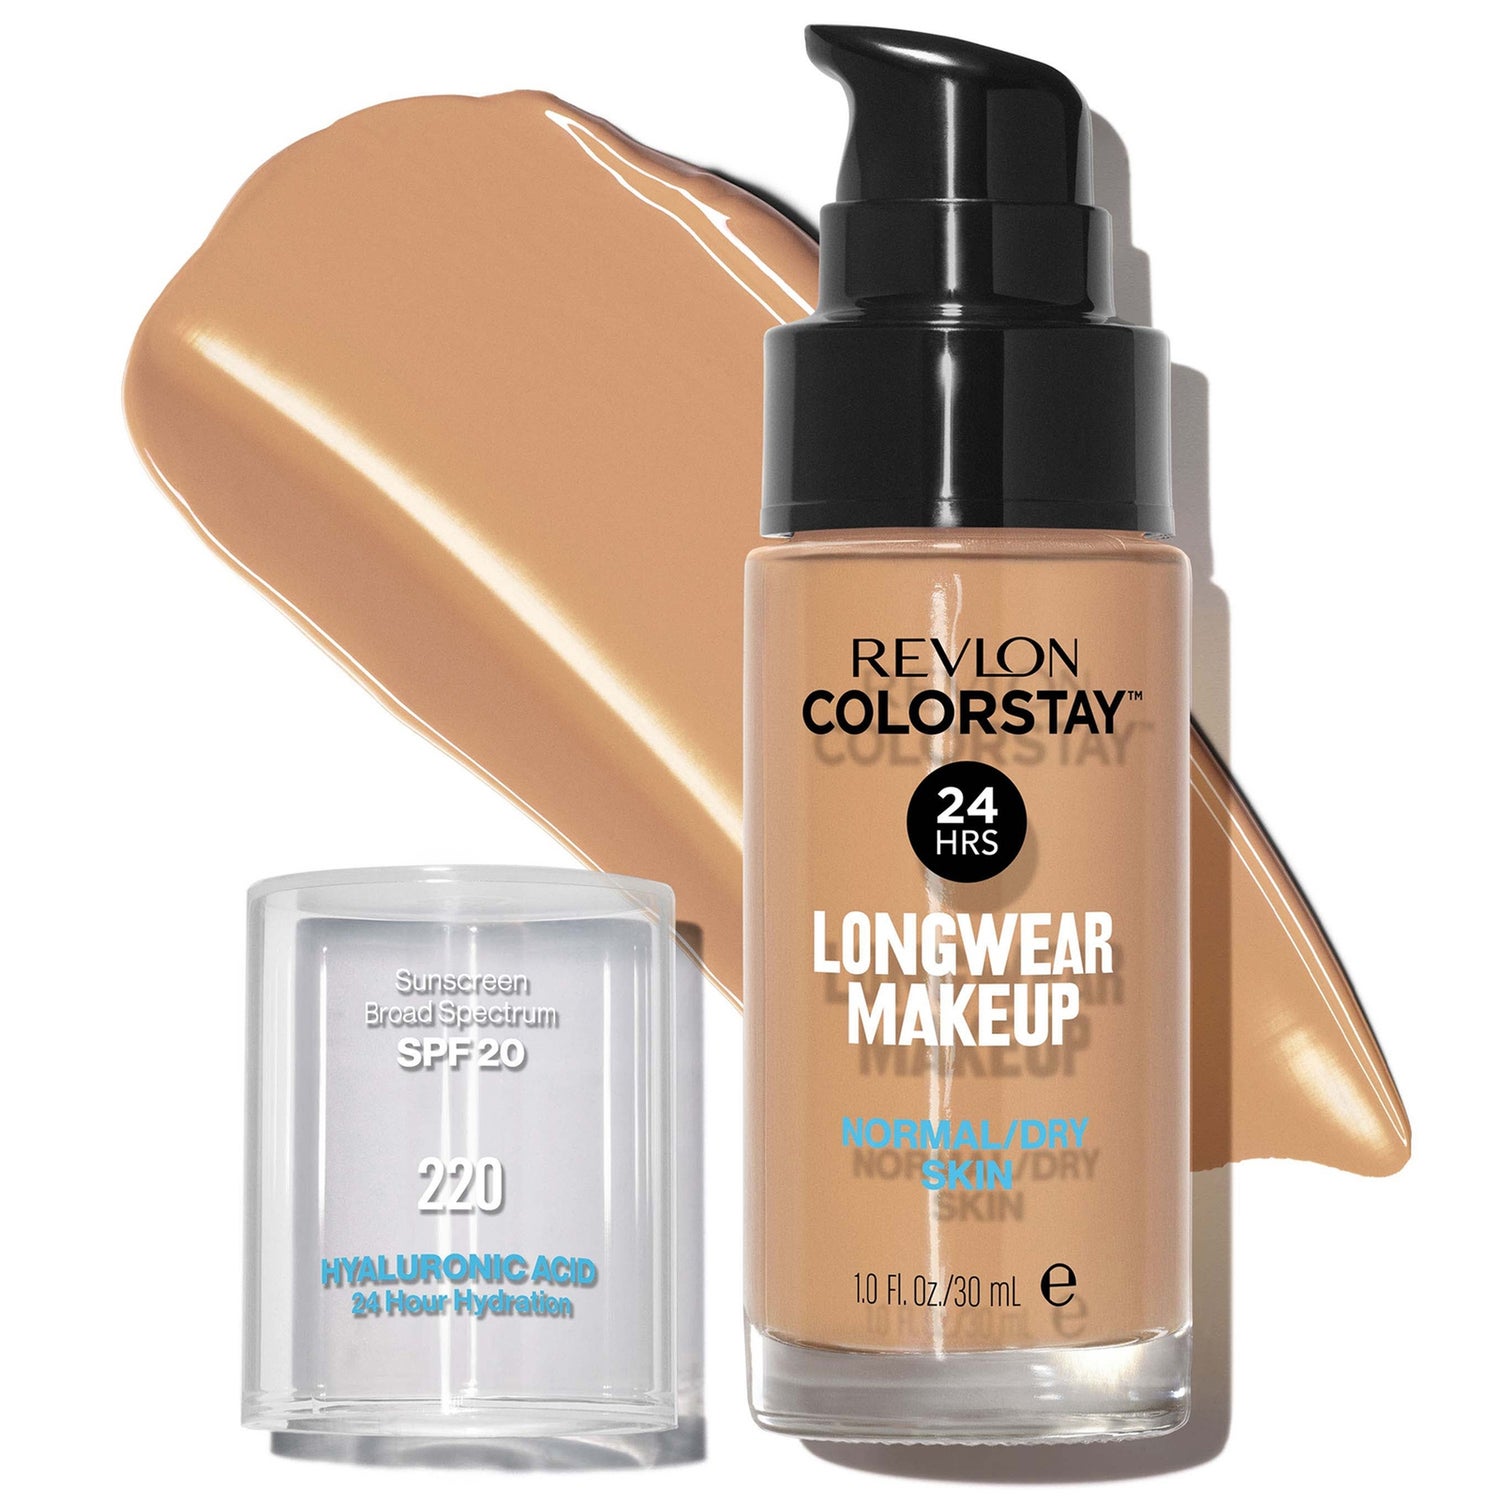 Revlon Colorstay Make-Up Foundation for Normal/Dry Skin podkład do cery normalnej i suchej (różne odcienie)